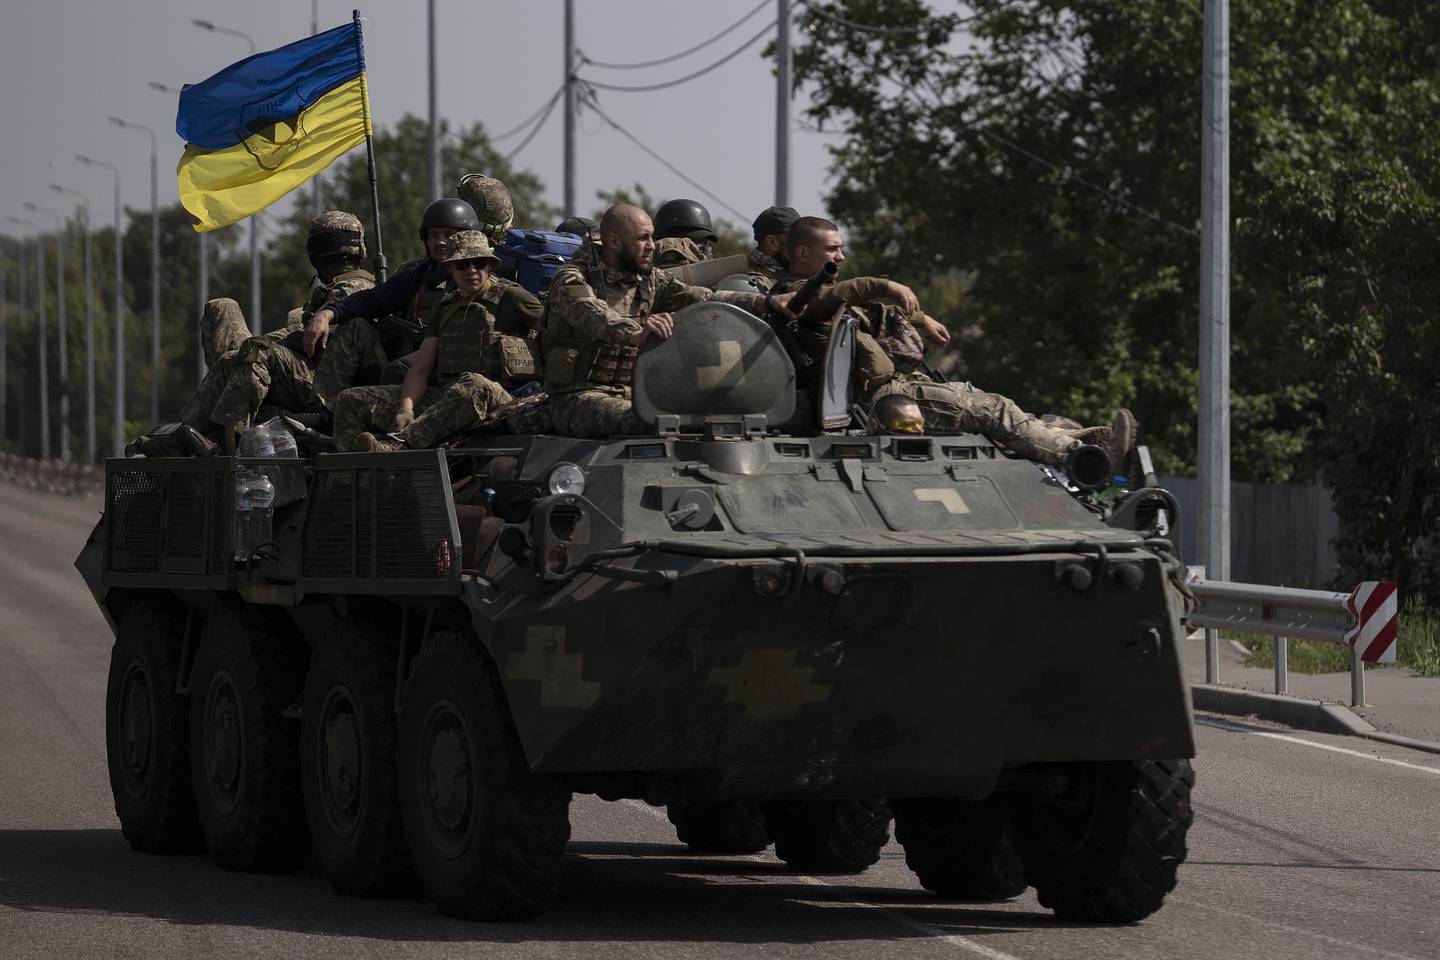 Ukrainian servicemen ride atop of an armored vehicle on a road in Donetsk region, eastern Ukraine, Sunday, Aug. 28, 2022.